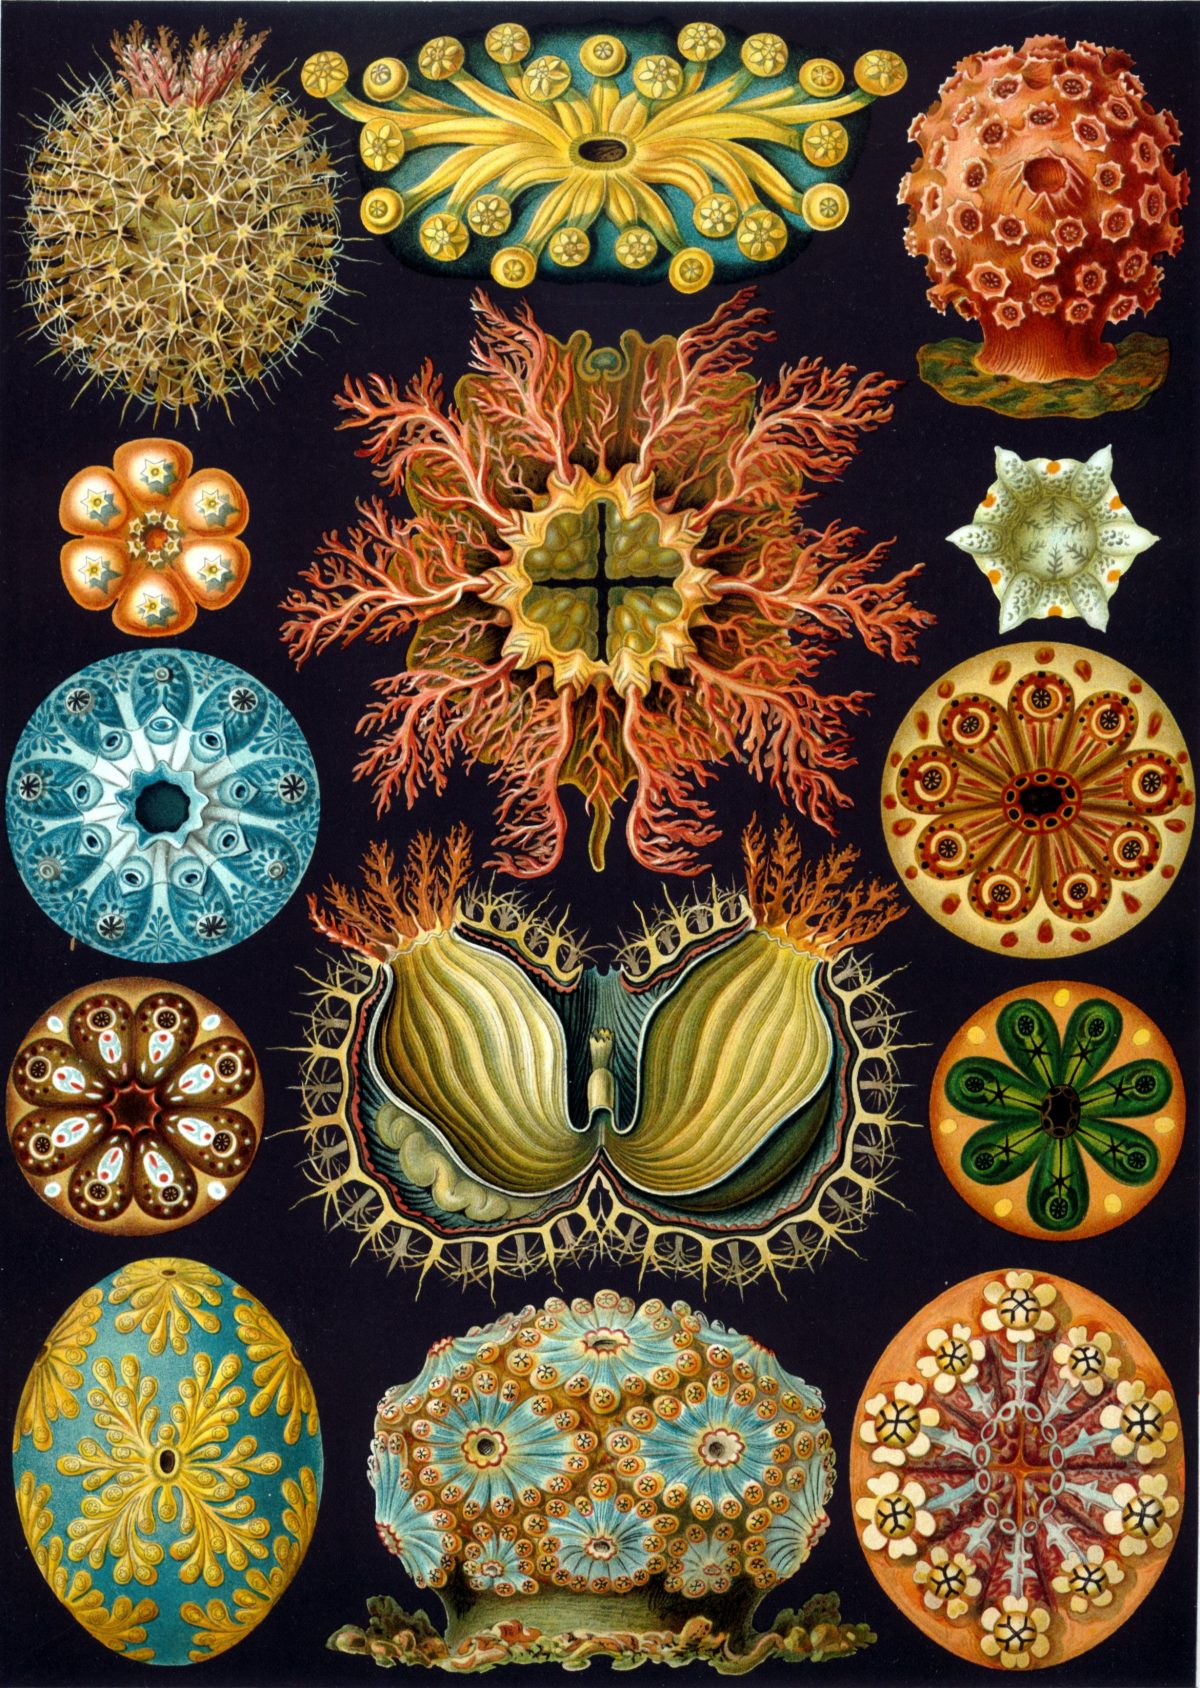 Ernst Haeckel - Kunstformen der Natur (1904), plate 85: Ascidiacea